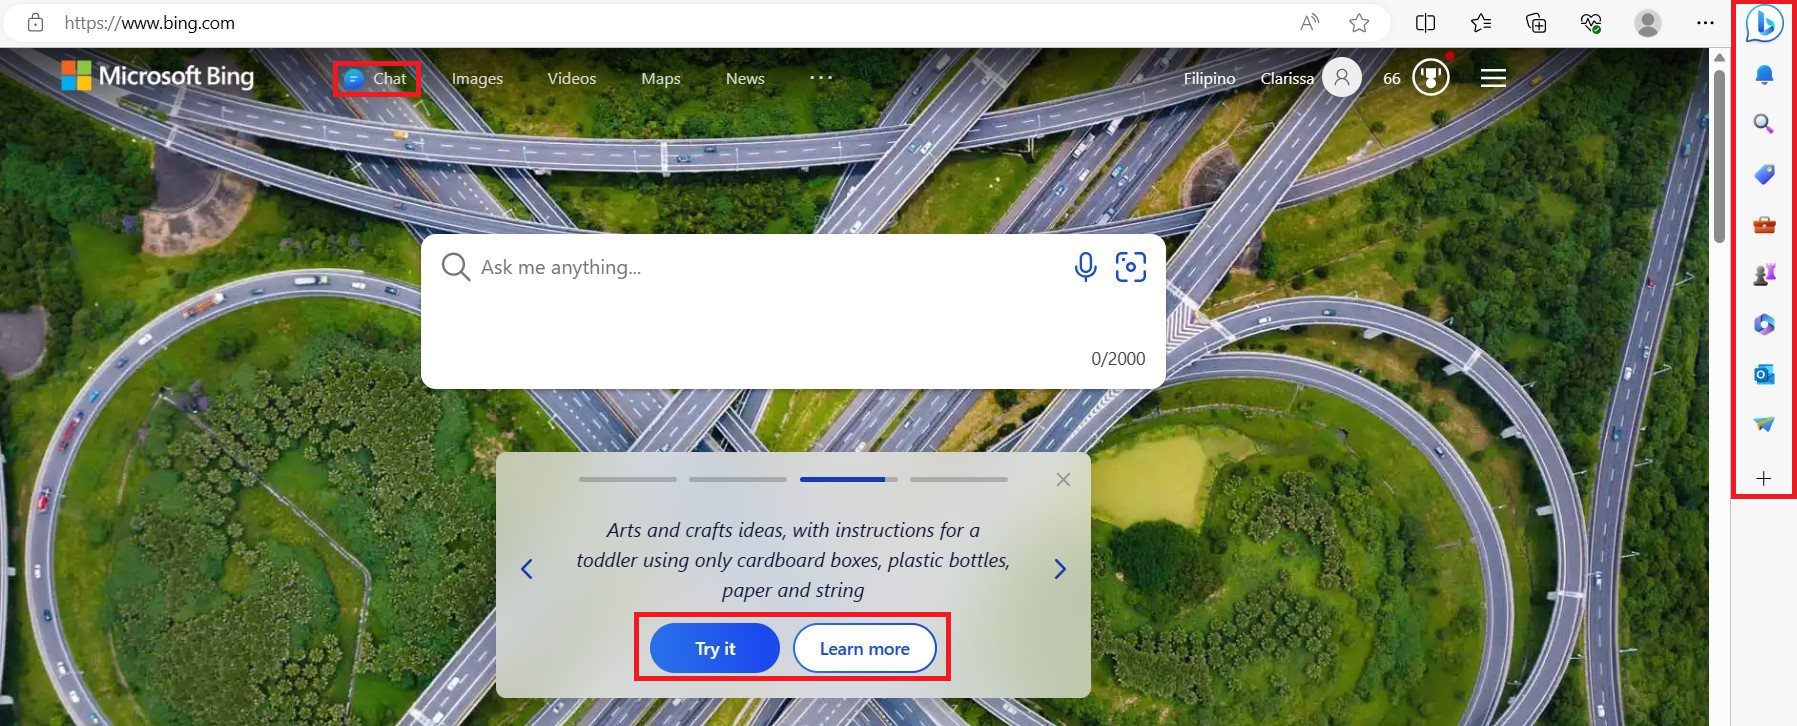 Bing AI User Interface